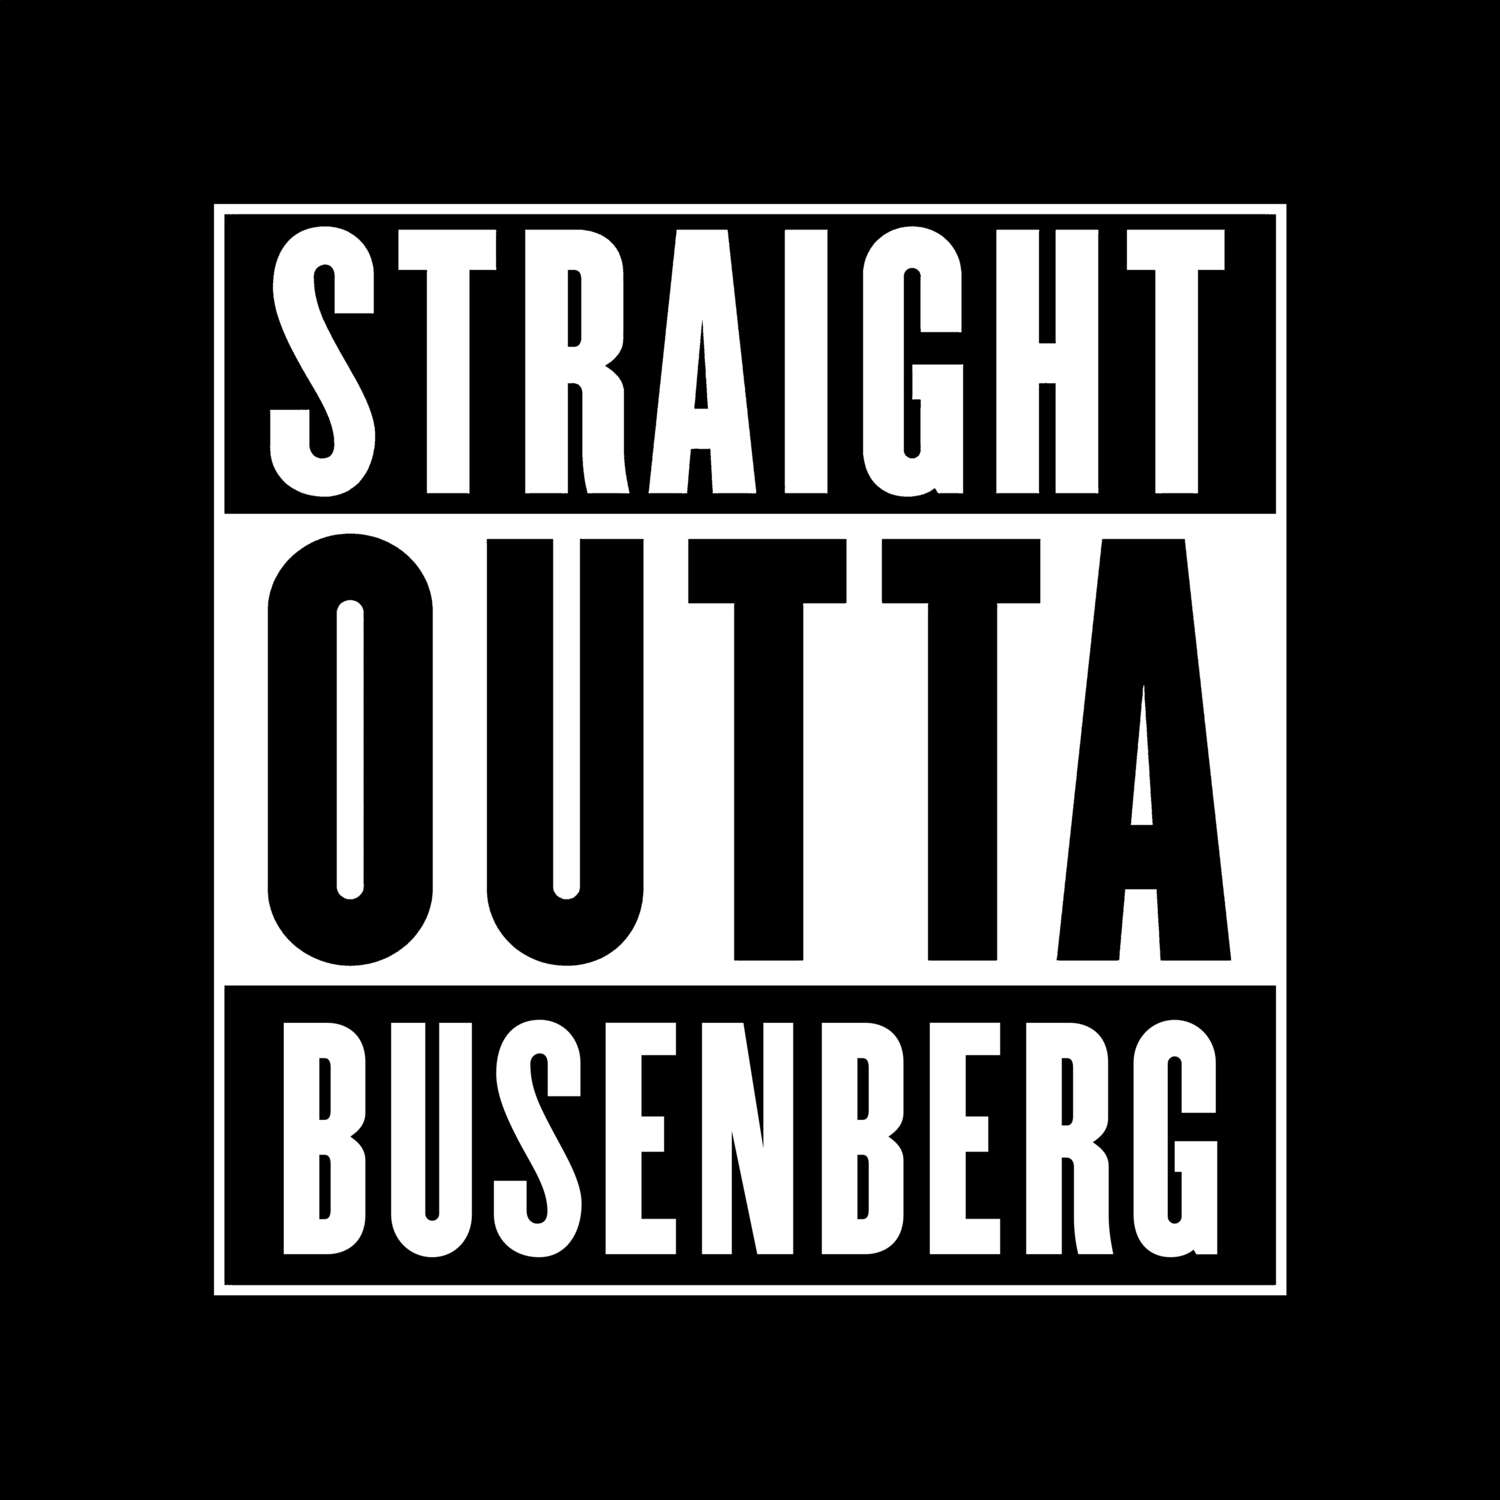 Busenberg T-Shirt »Straight Outta«